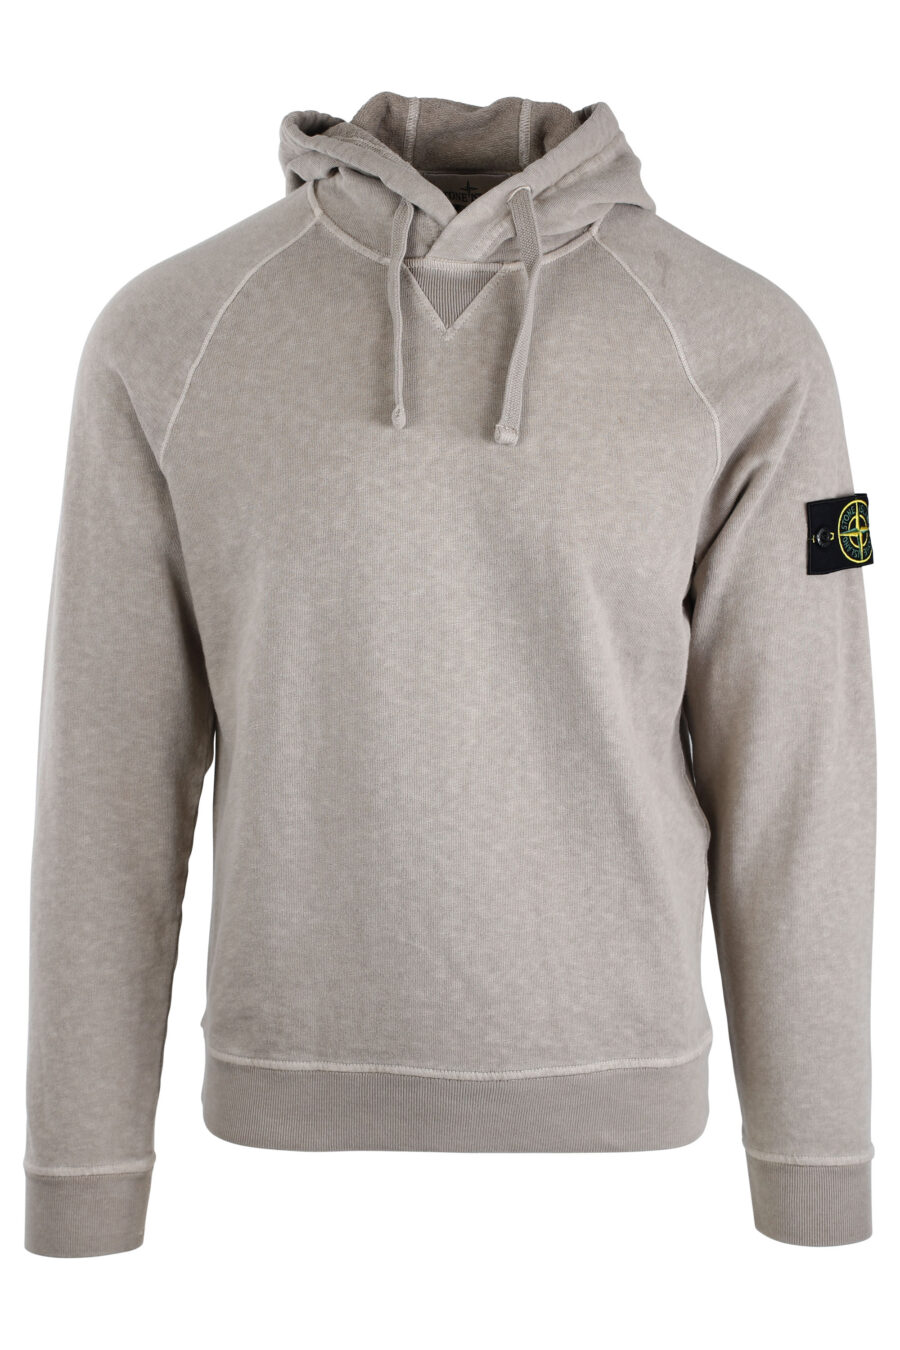 Beige sweatshirt with patch - IMG 1689